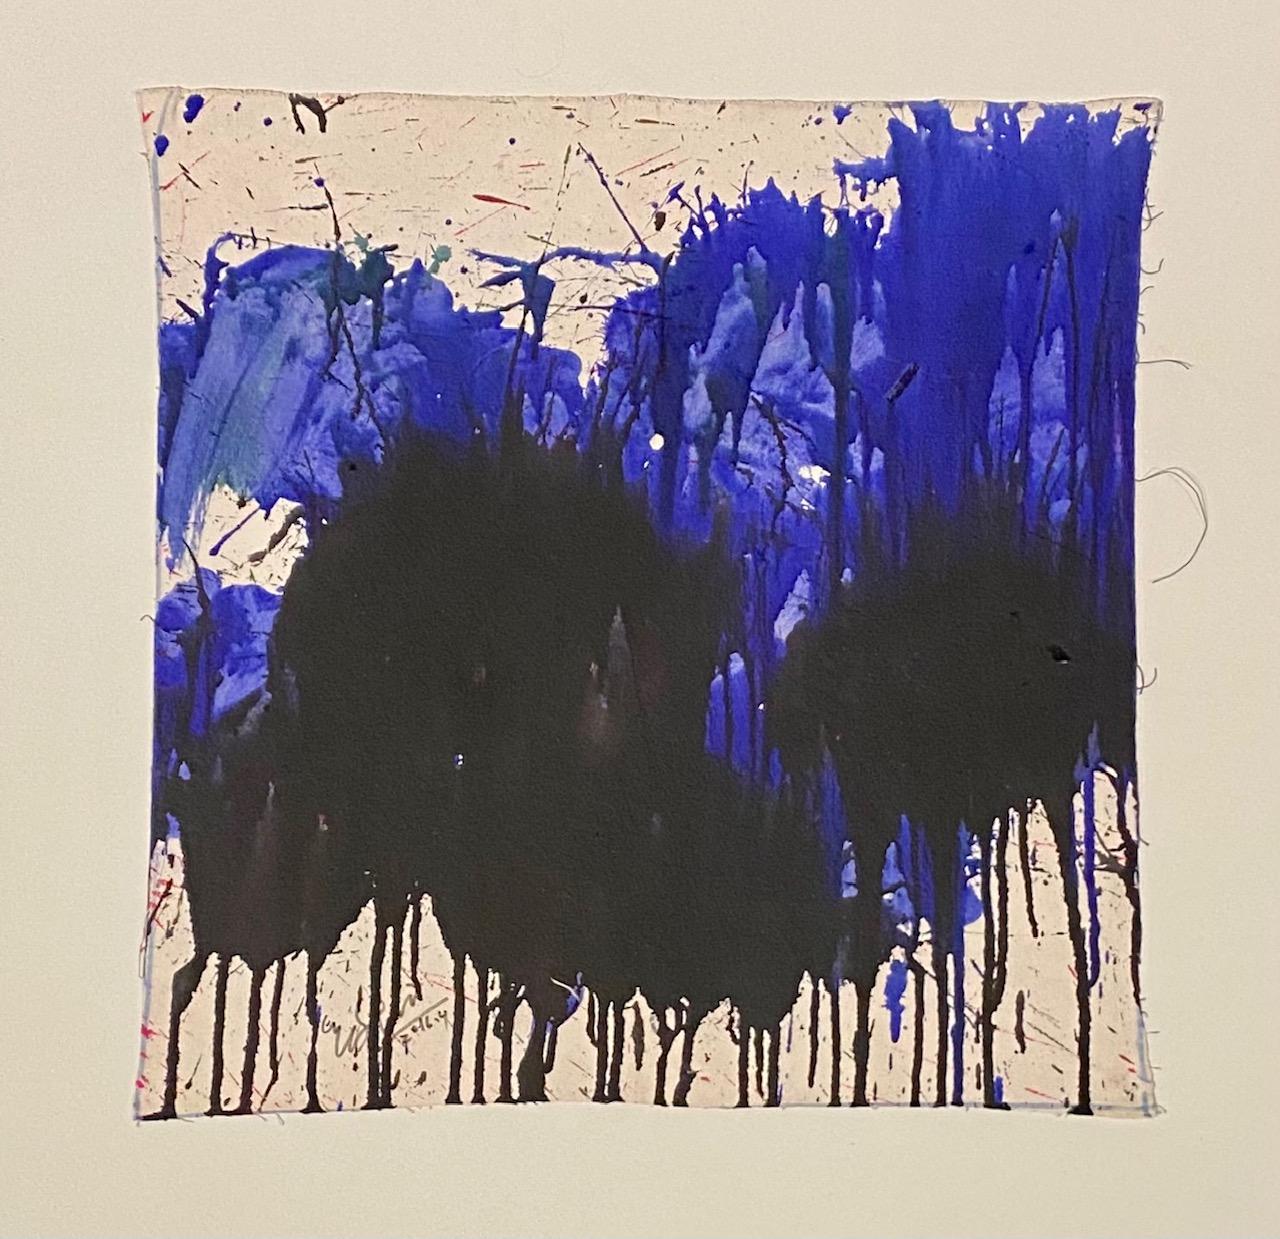 Abstract Painting Ushio Shinohara - "Bleu et noir sur blanc ", peinture acrylique sur toile - peinture abstraite Whiting